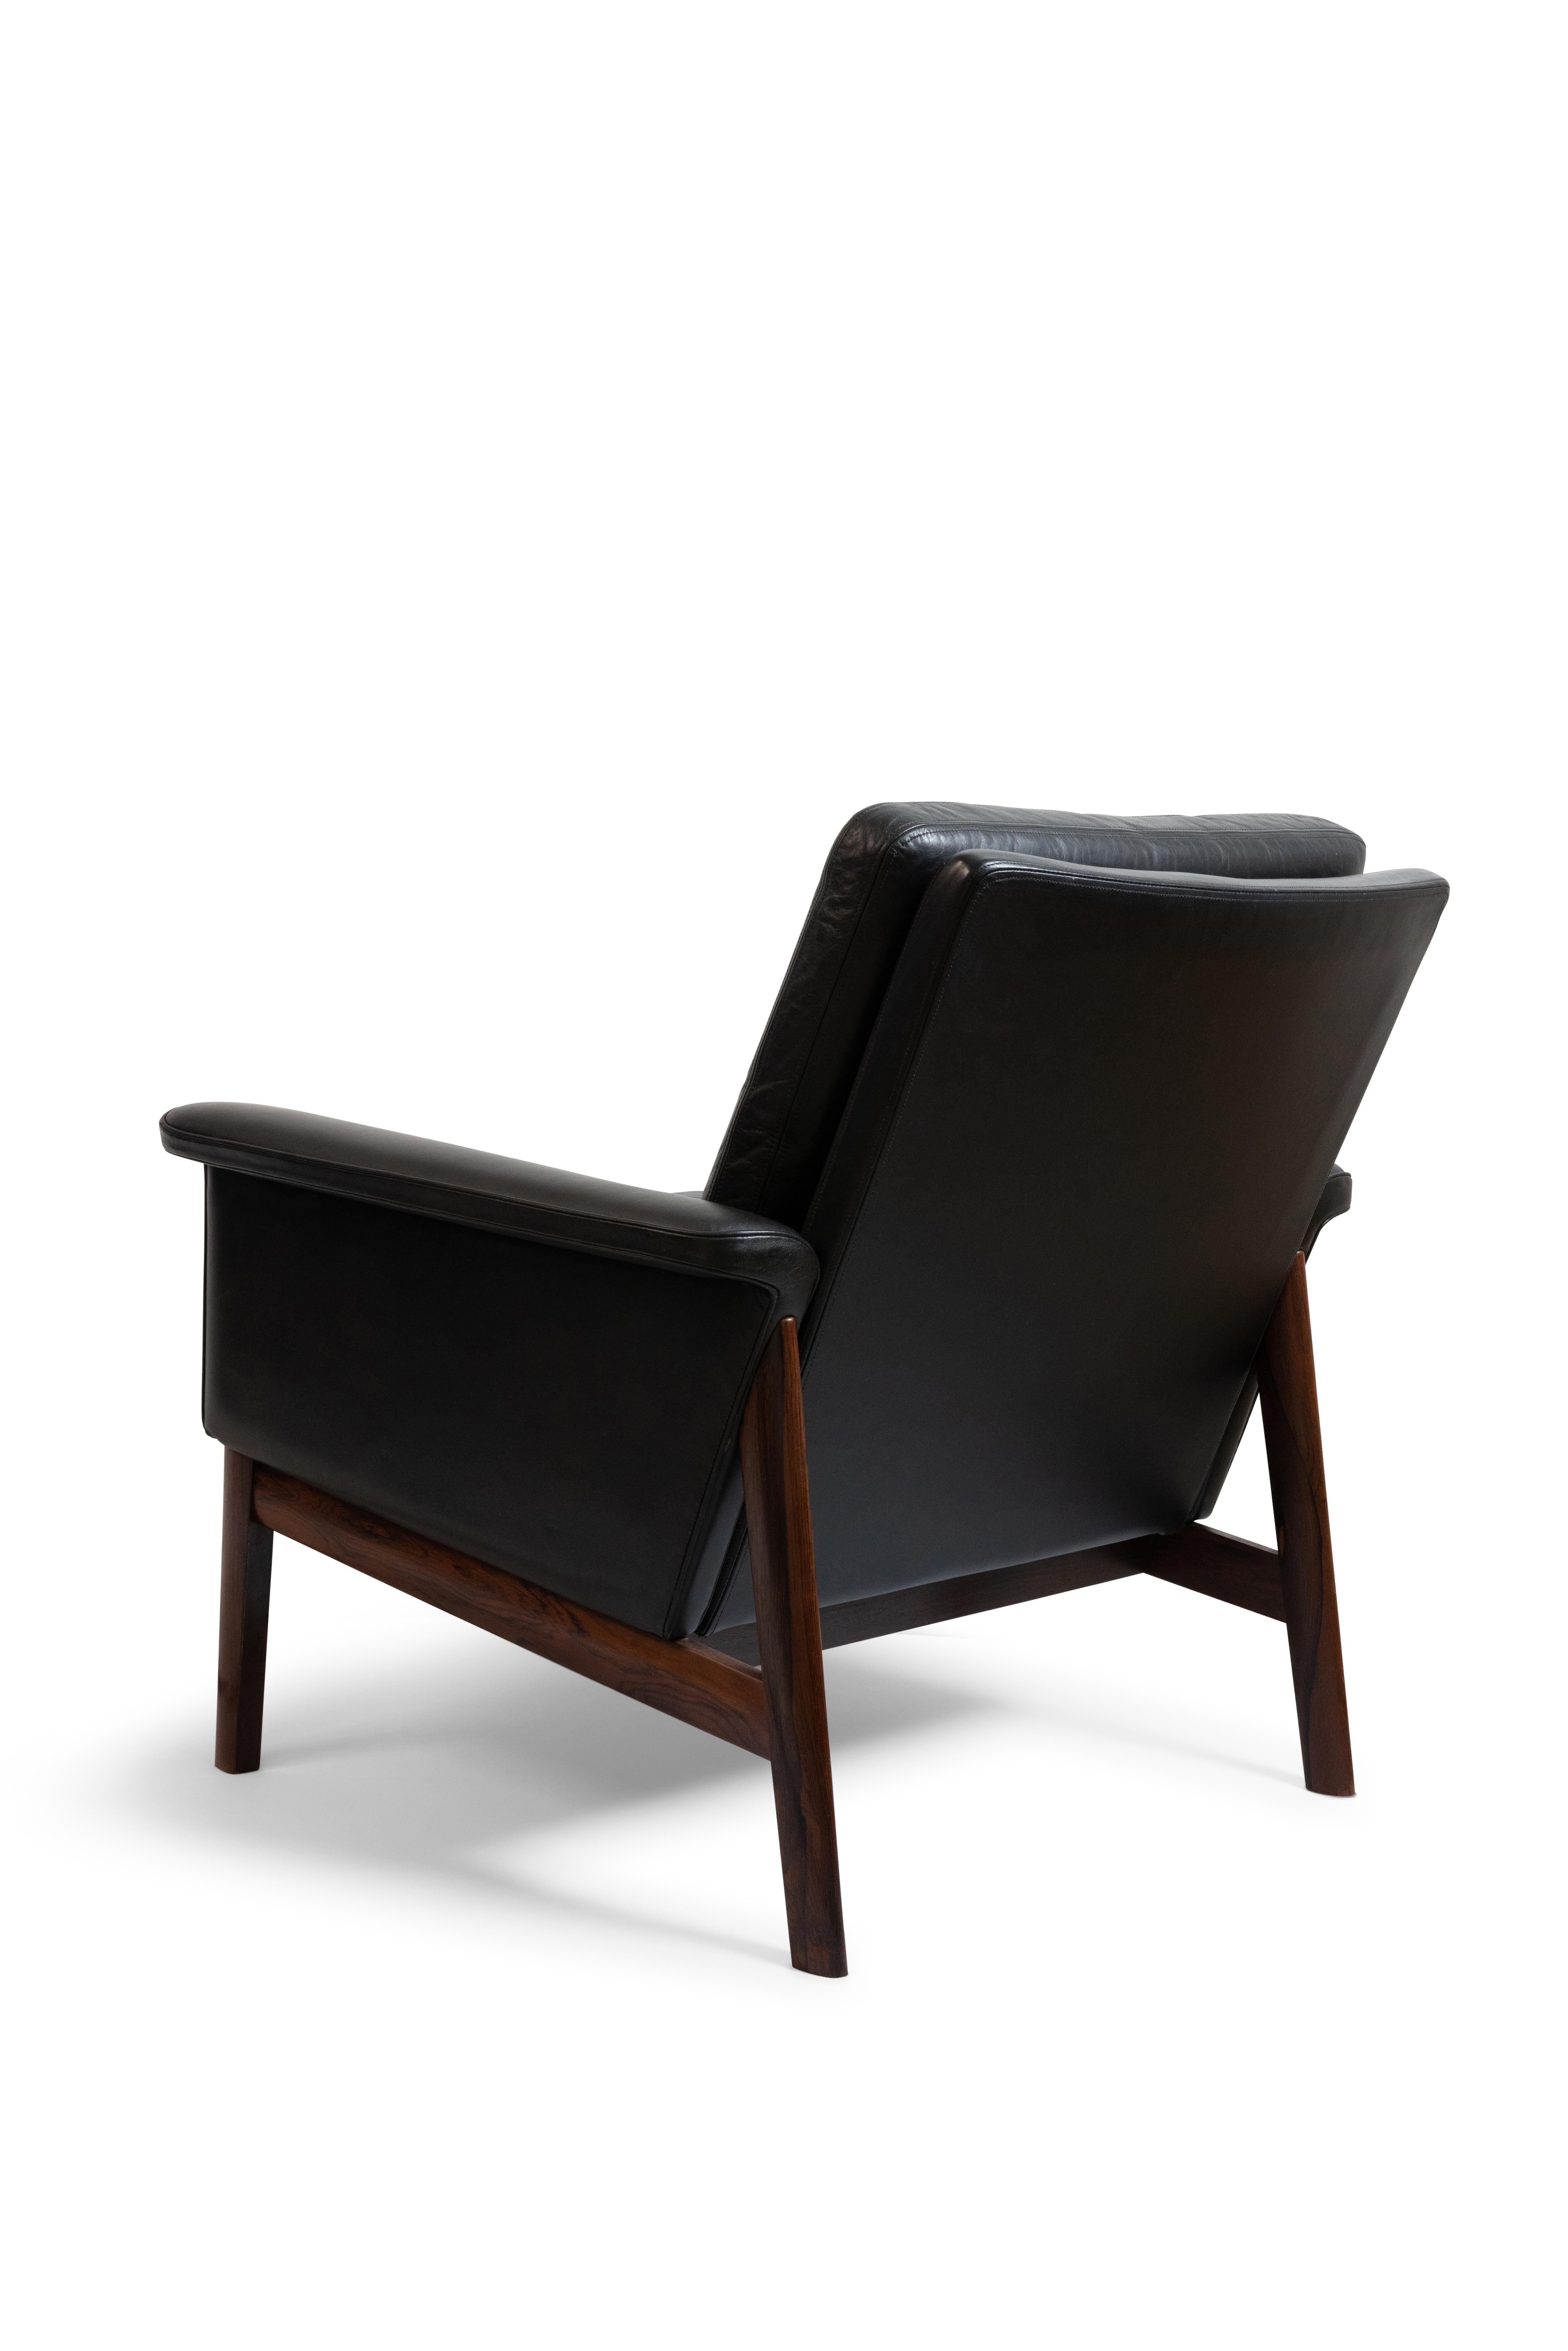 Mid-20th Century Finn Juhl Three Seat Sofa with Original Black Leather, Model 218/3, Denmark For Sale